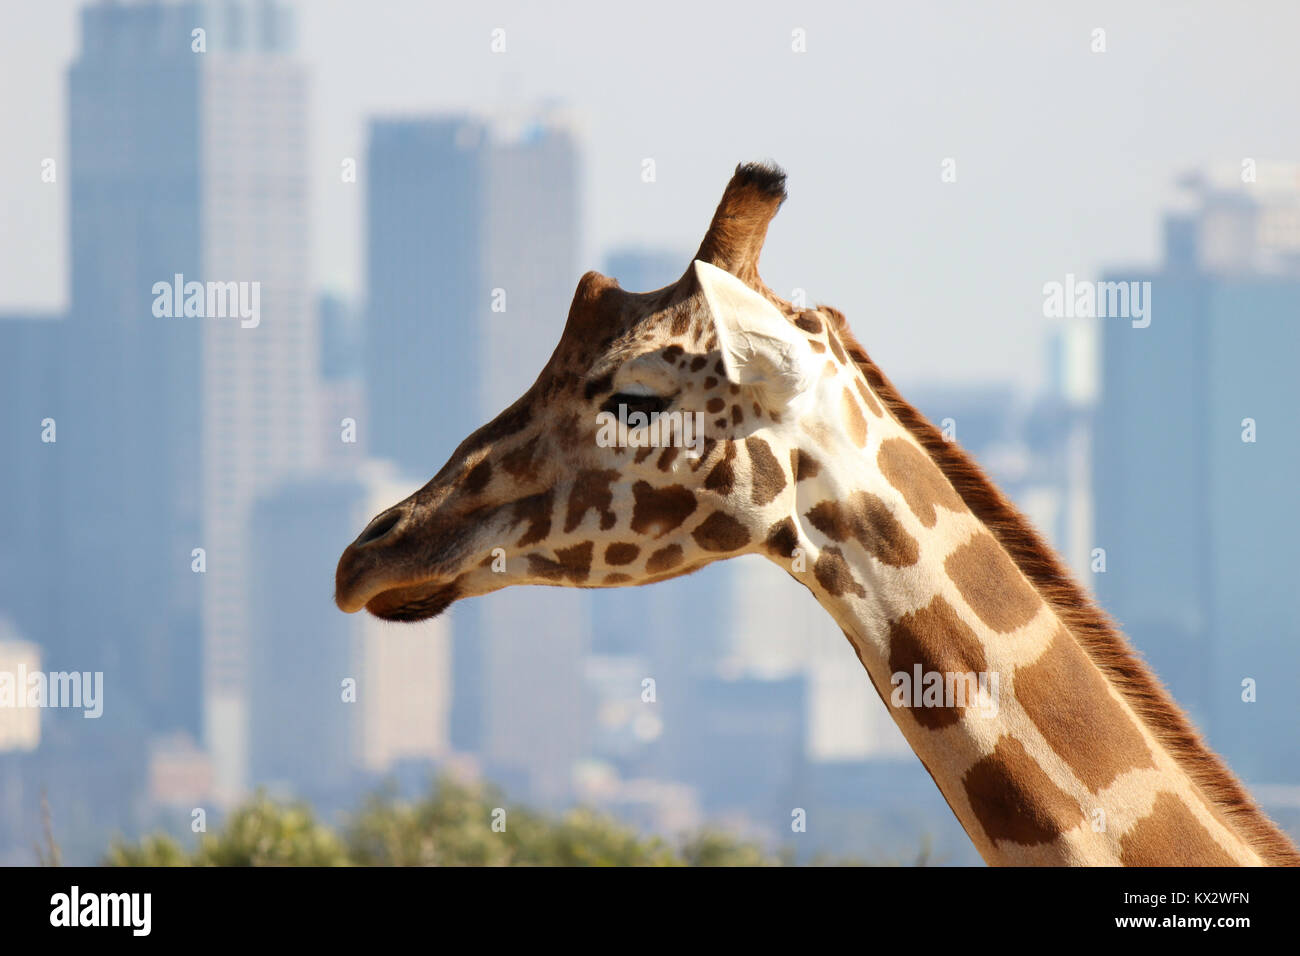 giraffe head with city skyline in background Stock Photo